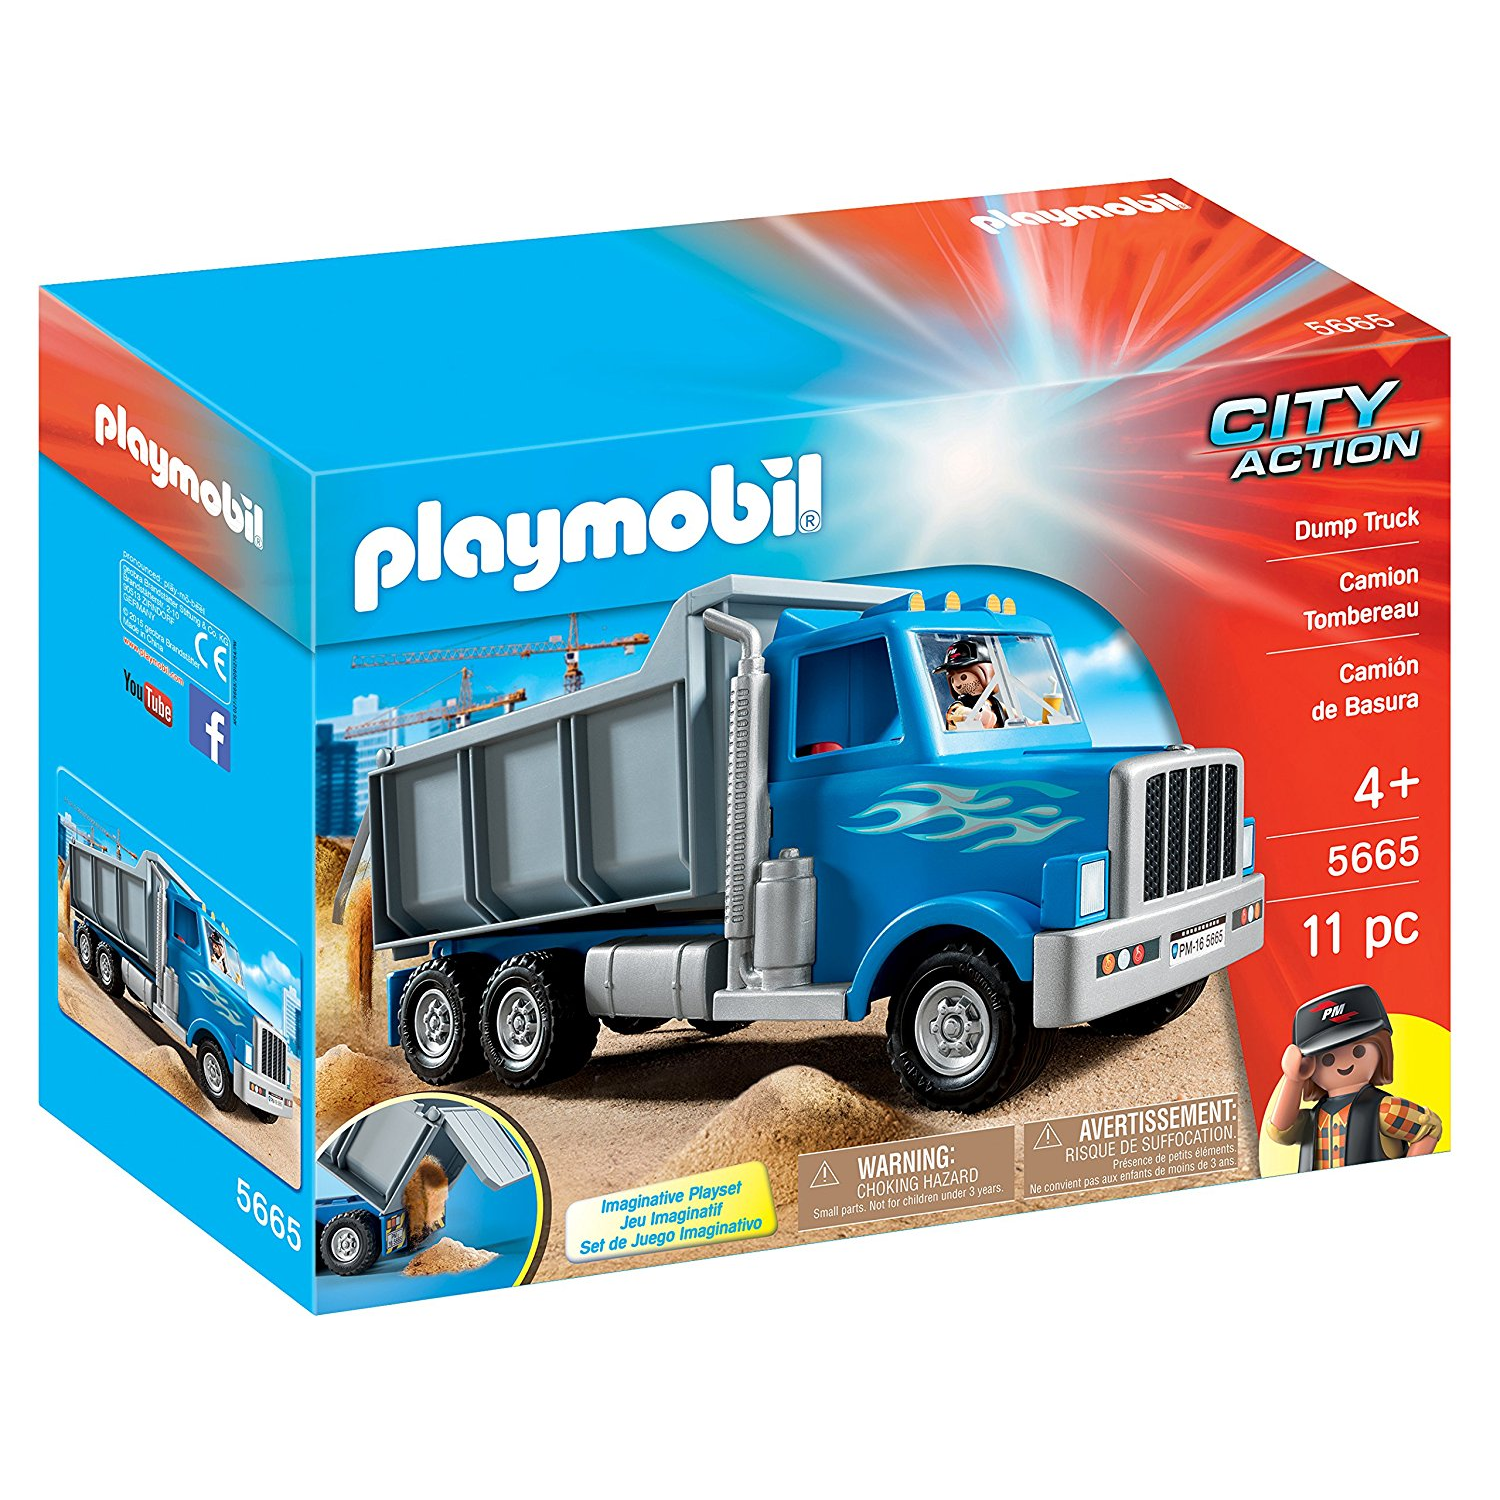 PLAYMOBIL Dump Truck Playset Only $11.97! (Reg $20.68)